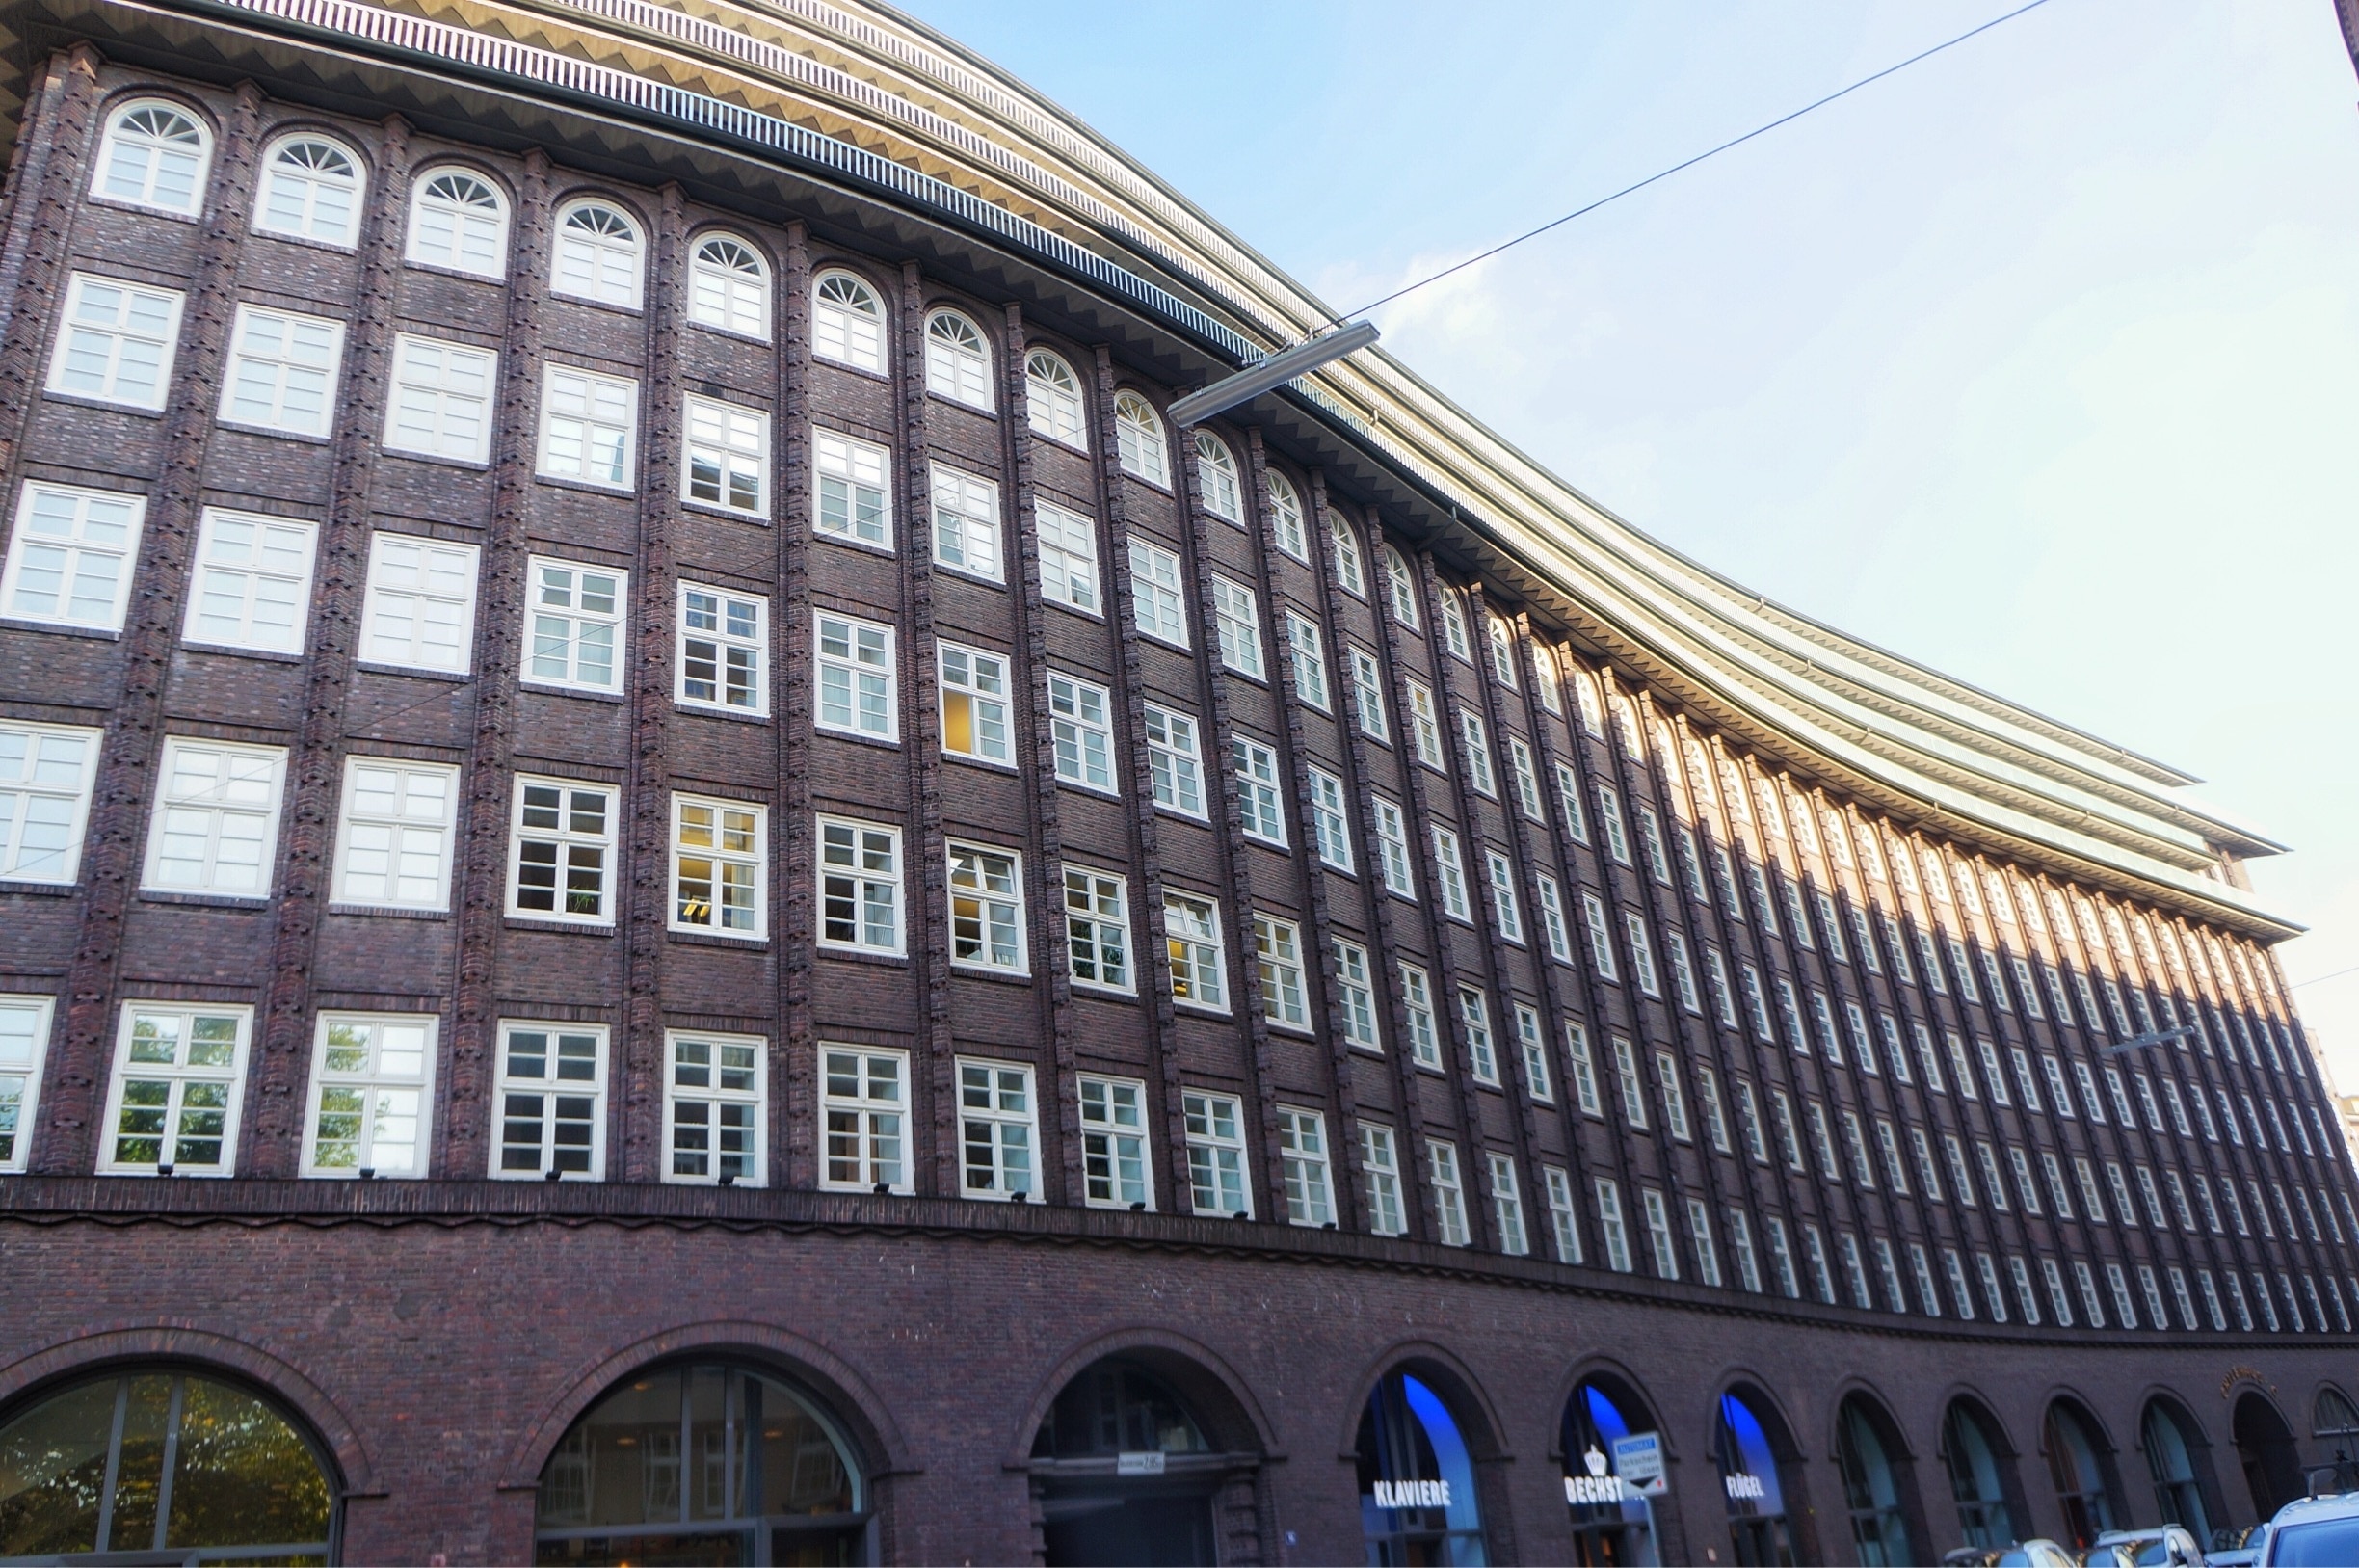 Chilihaus , building with 2800 windows, UNESCO Heritage - Hamburg